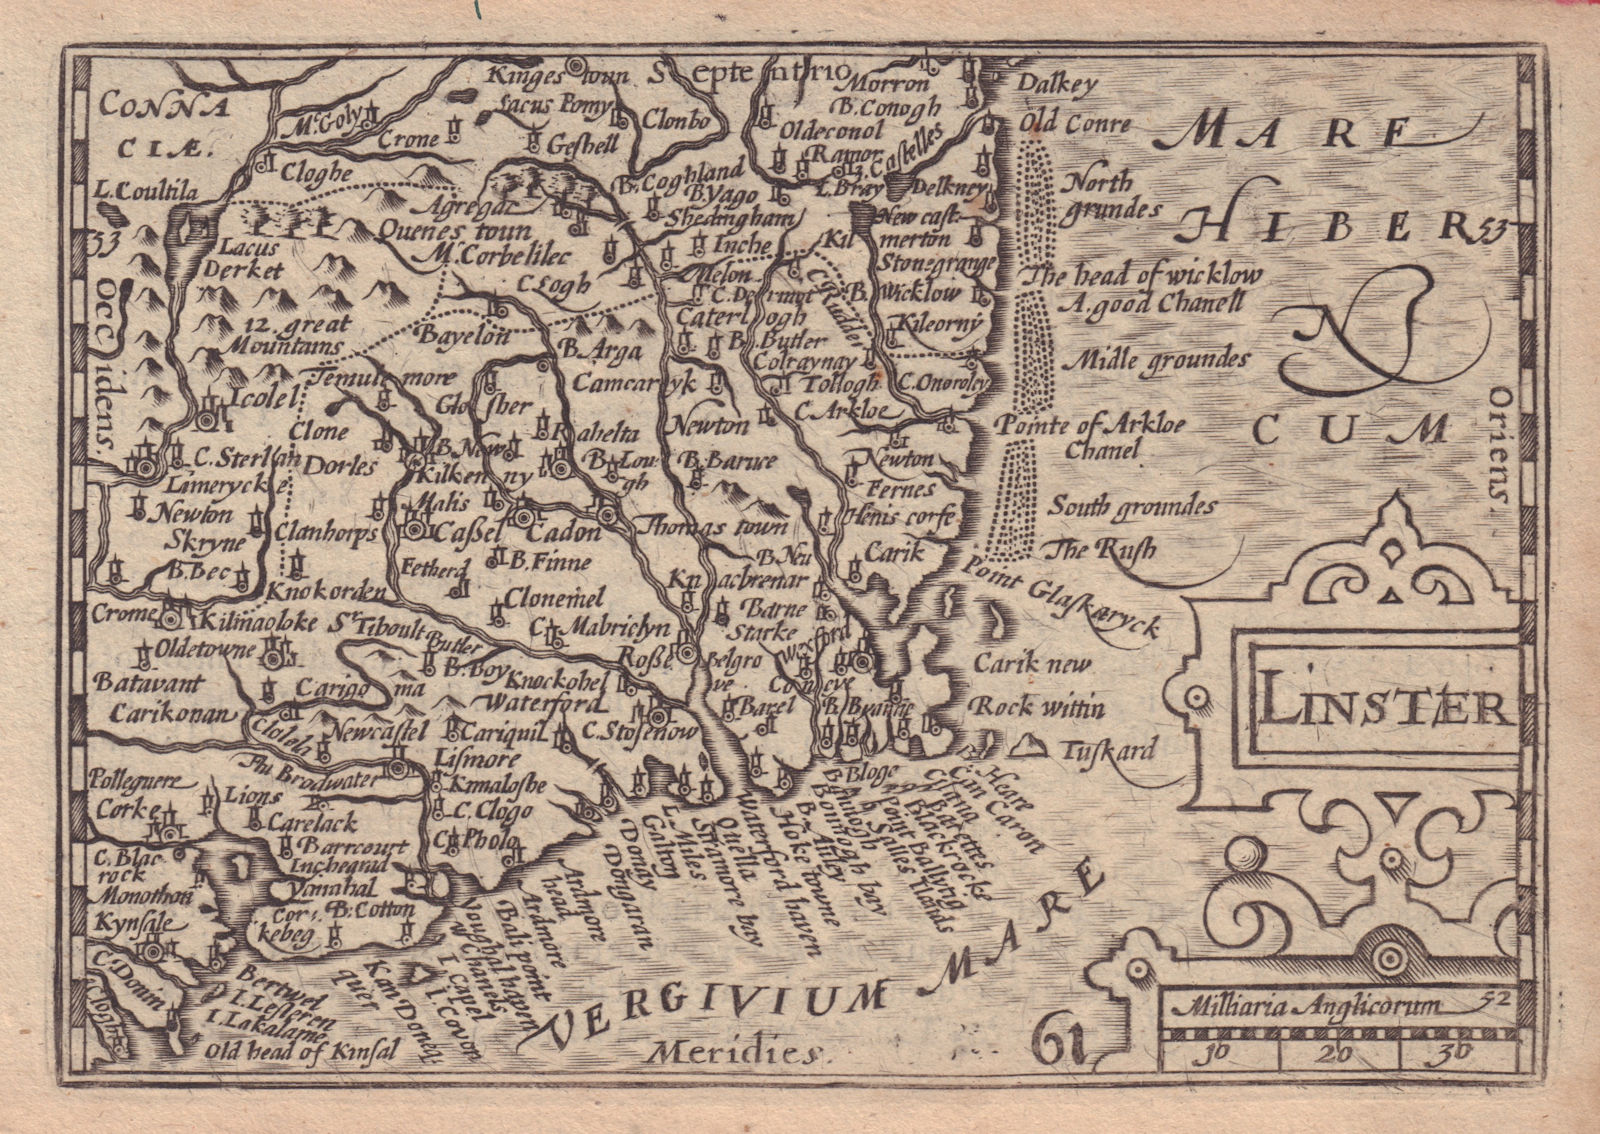 Linster by van den Keere. "Speed miniature" Leinster, Ireland 1632 old map